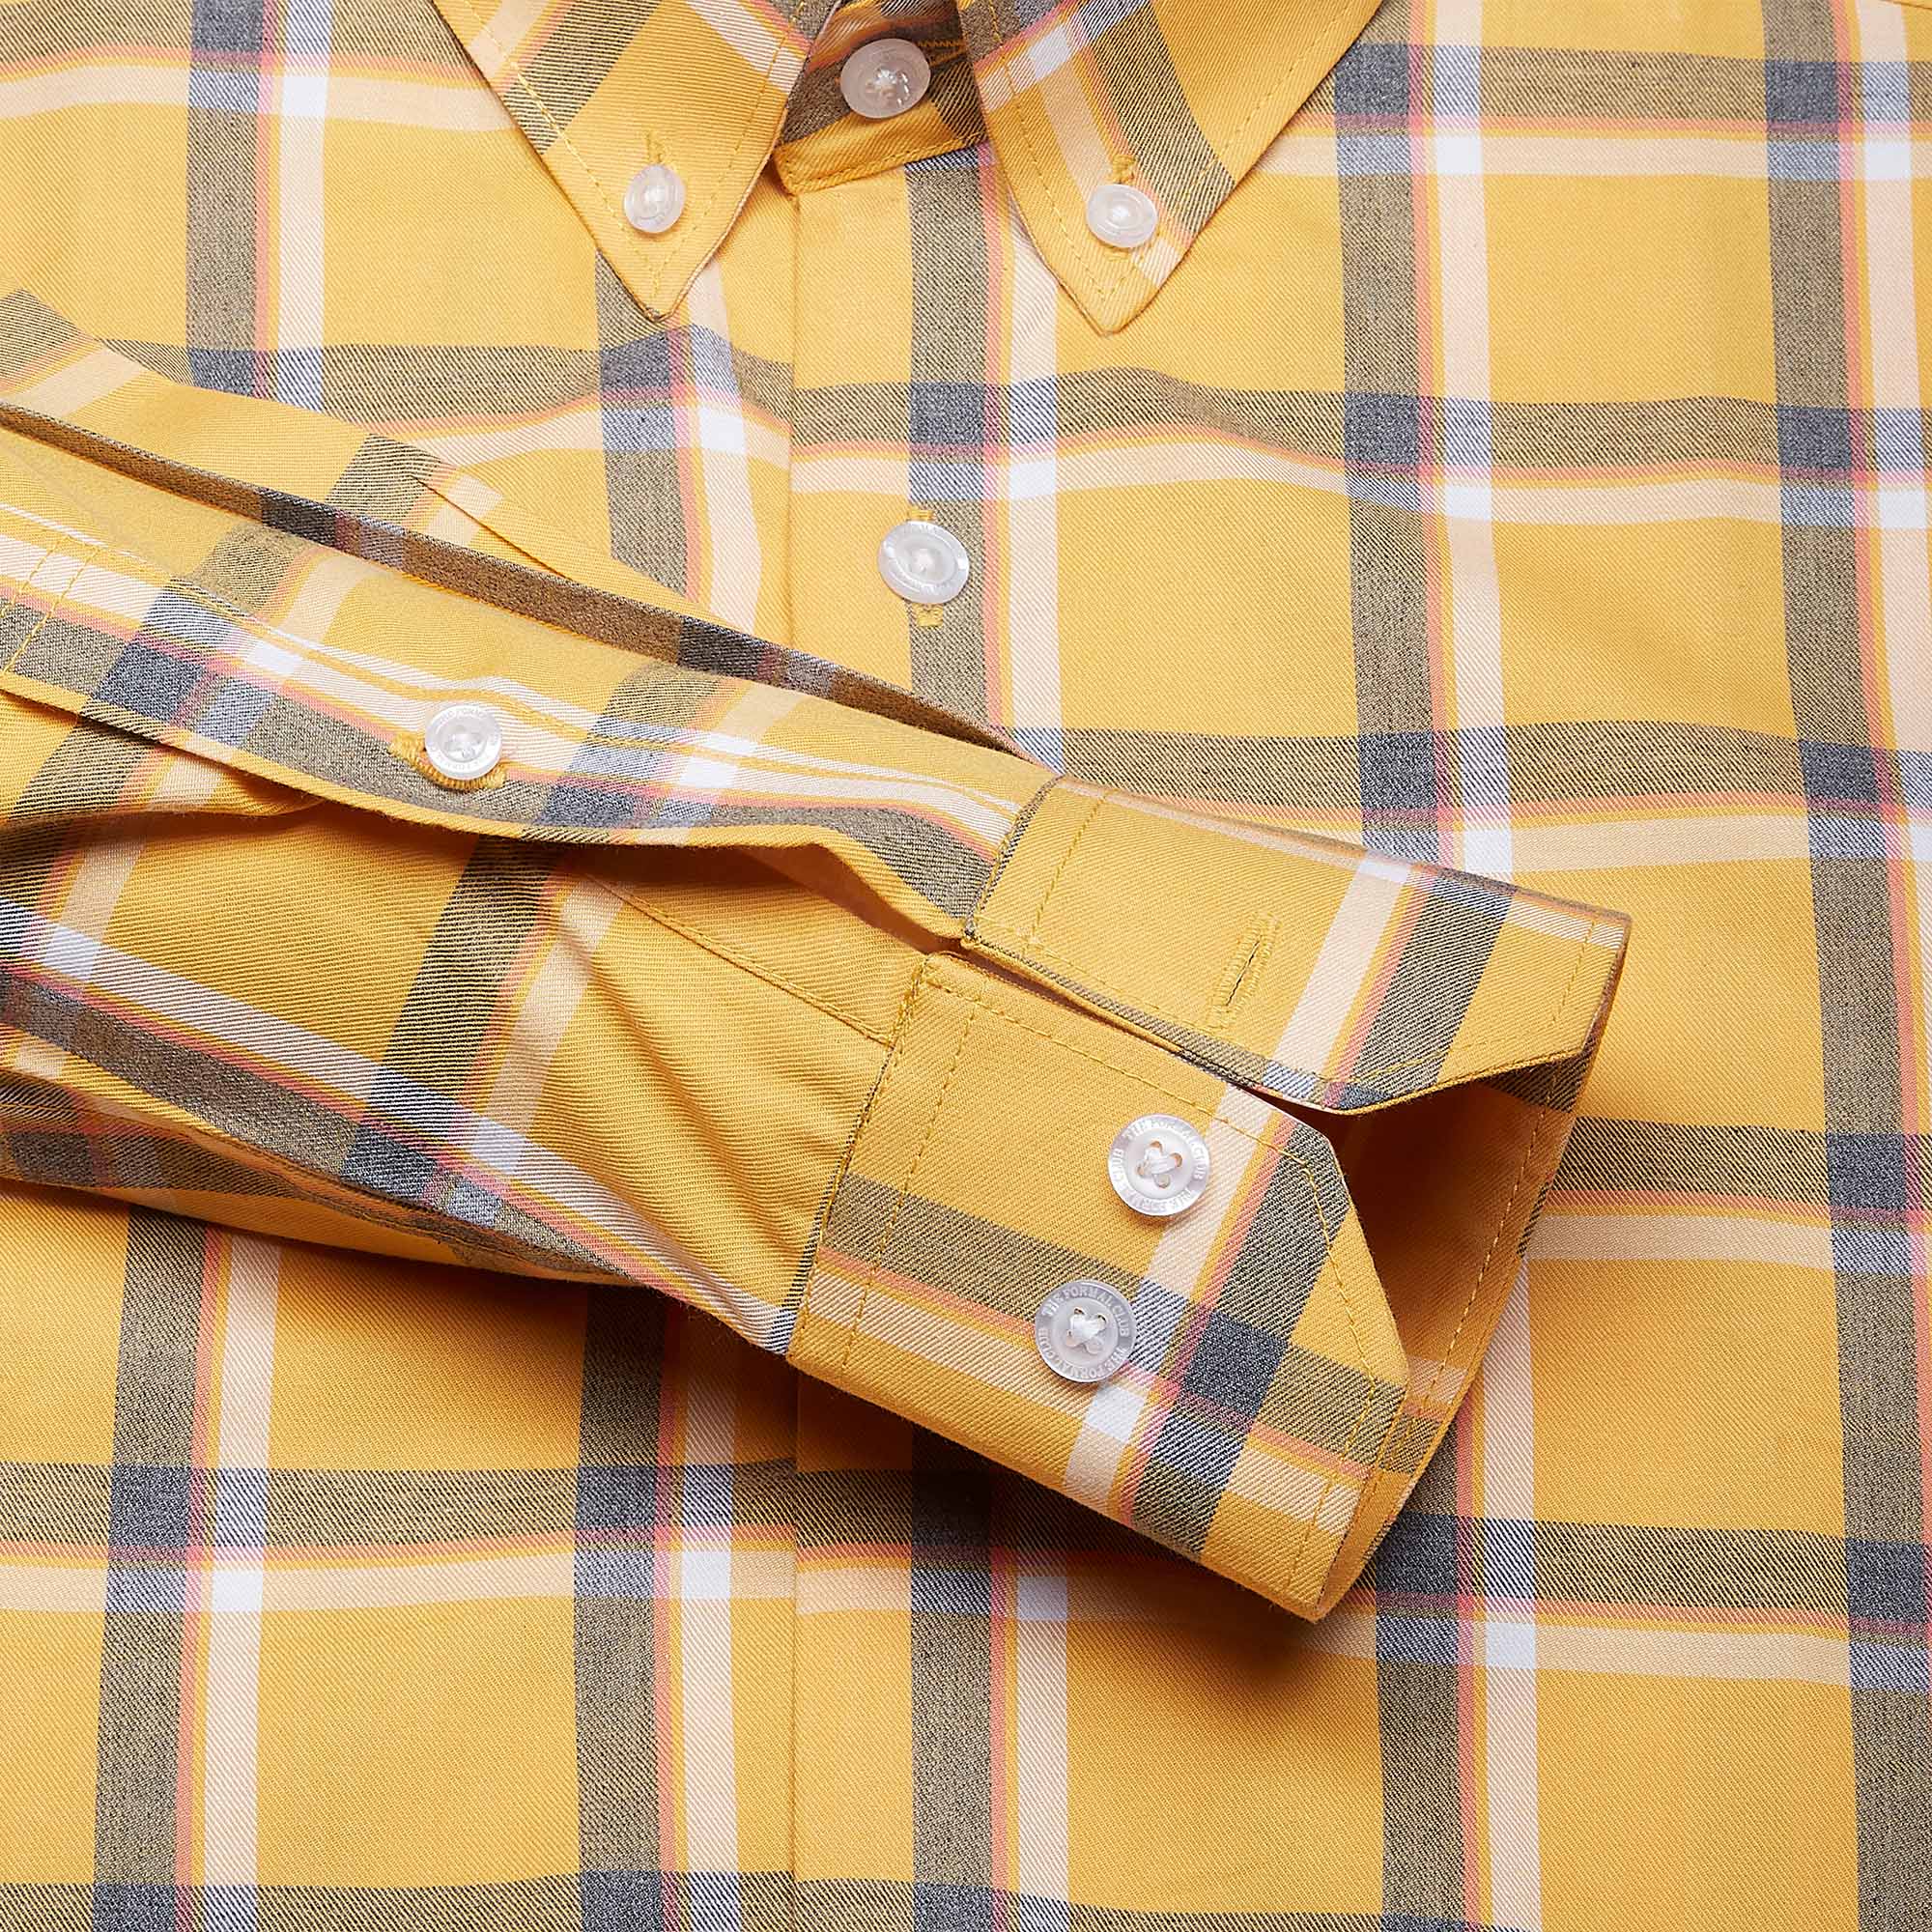 Maverick Cotton Check Shirt In Yellow - The Formal Club